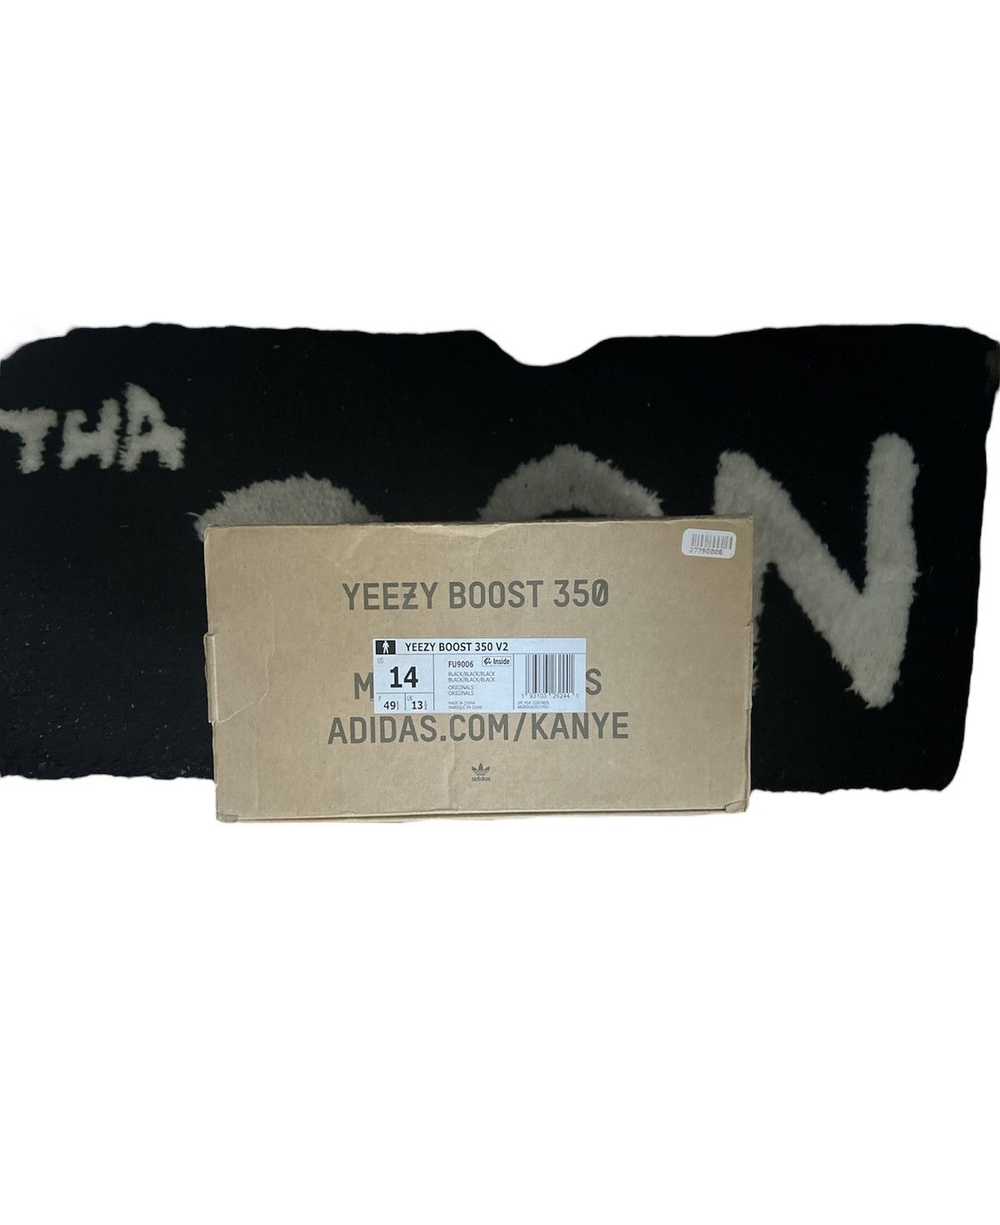 Adidas adidas Yeezy Boost 350 V2 onyx - image 7